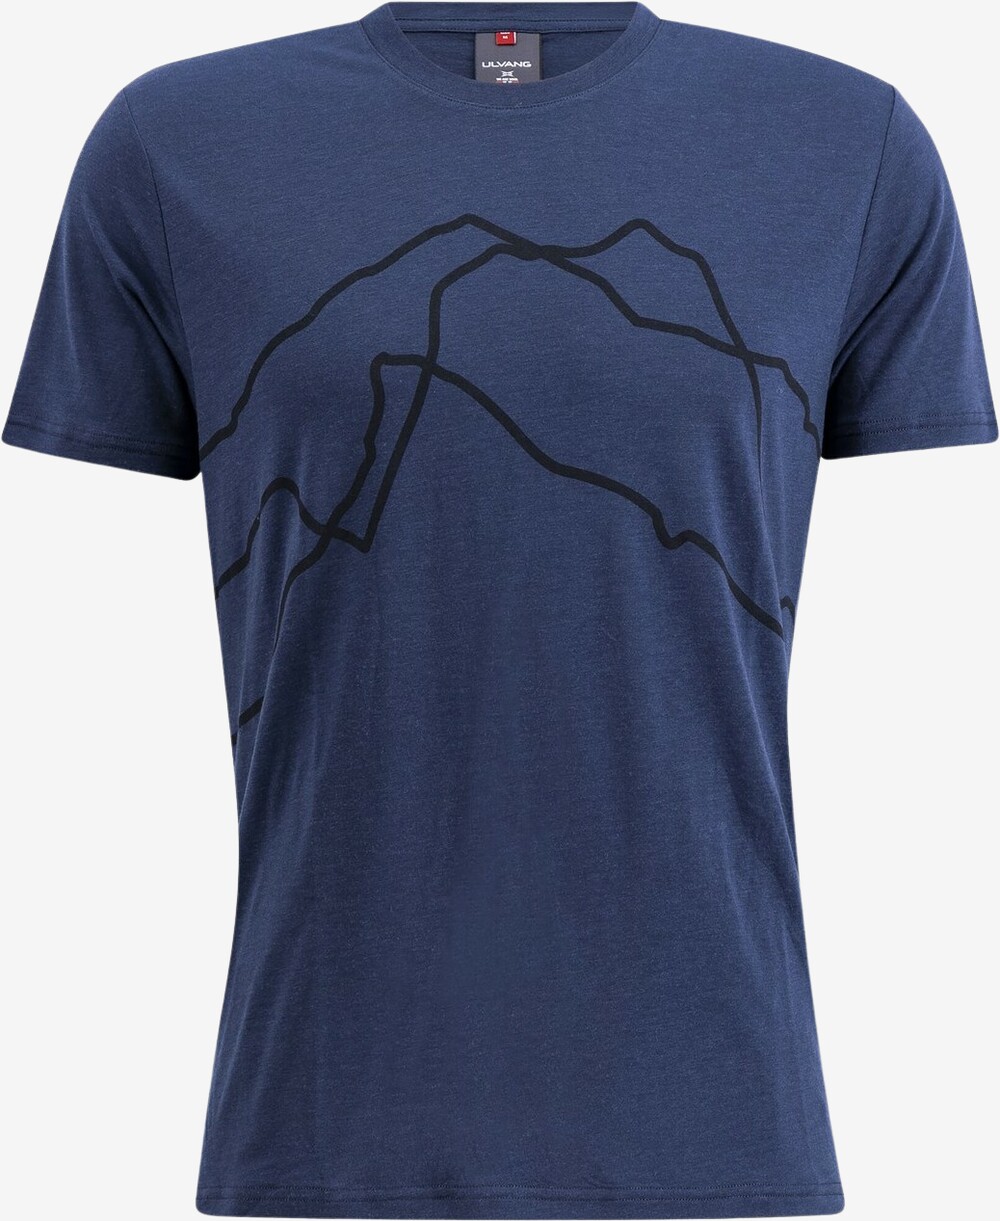 Se Ulvang - Eio t-shirt (Blå) - XL hos Friluft.dk